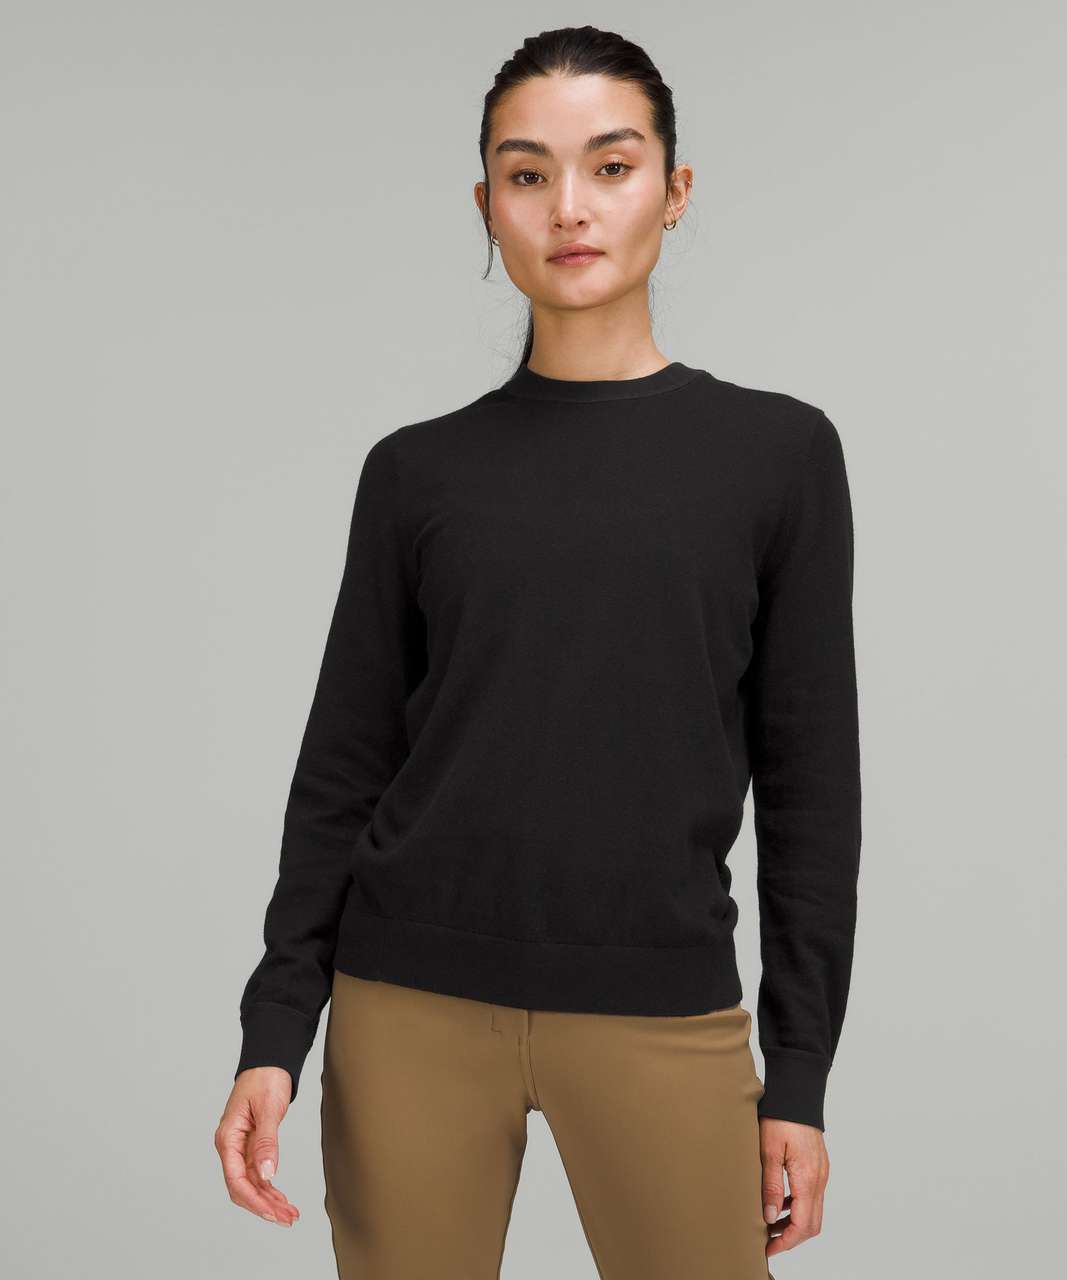 Lululemon Silk-Blend Crewneck Sweater - Black